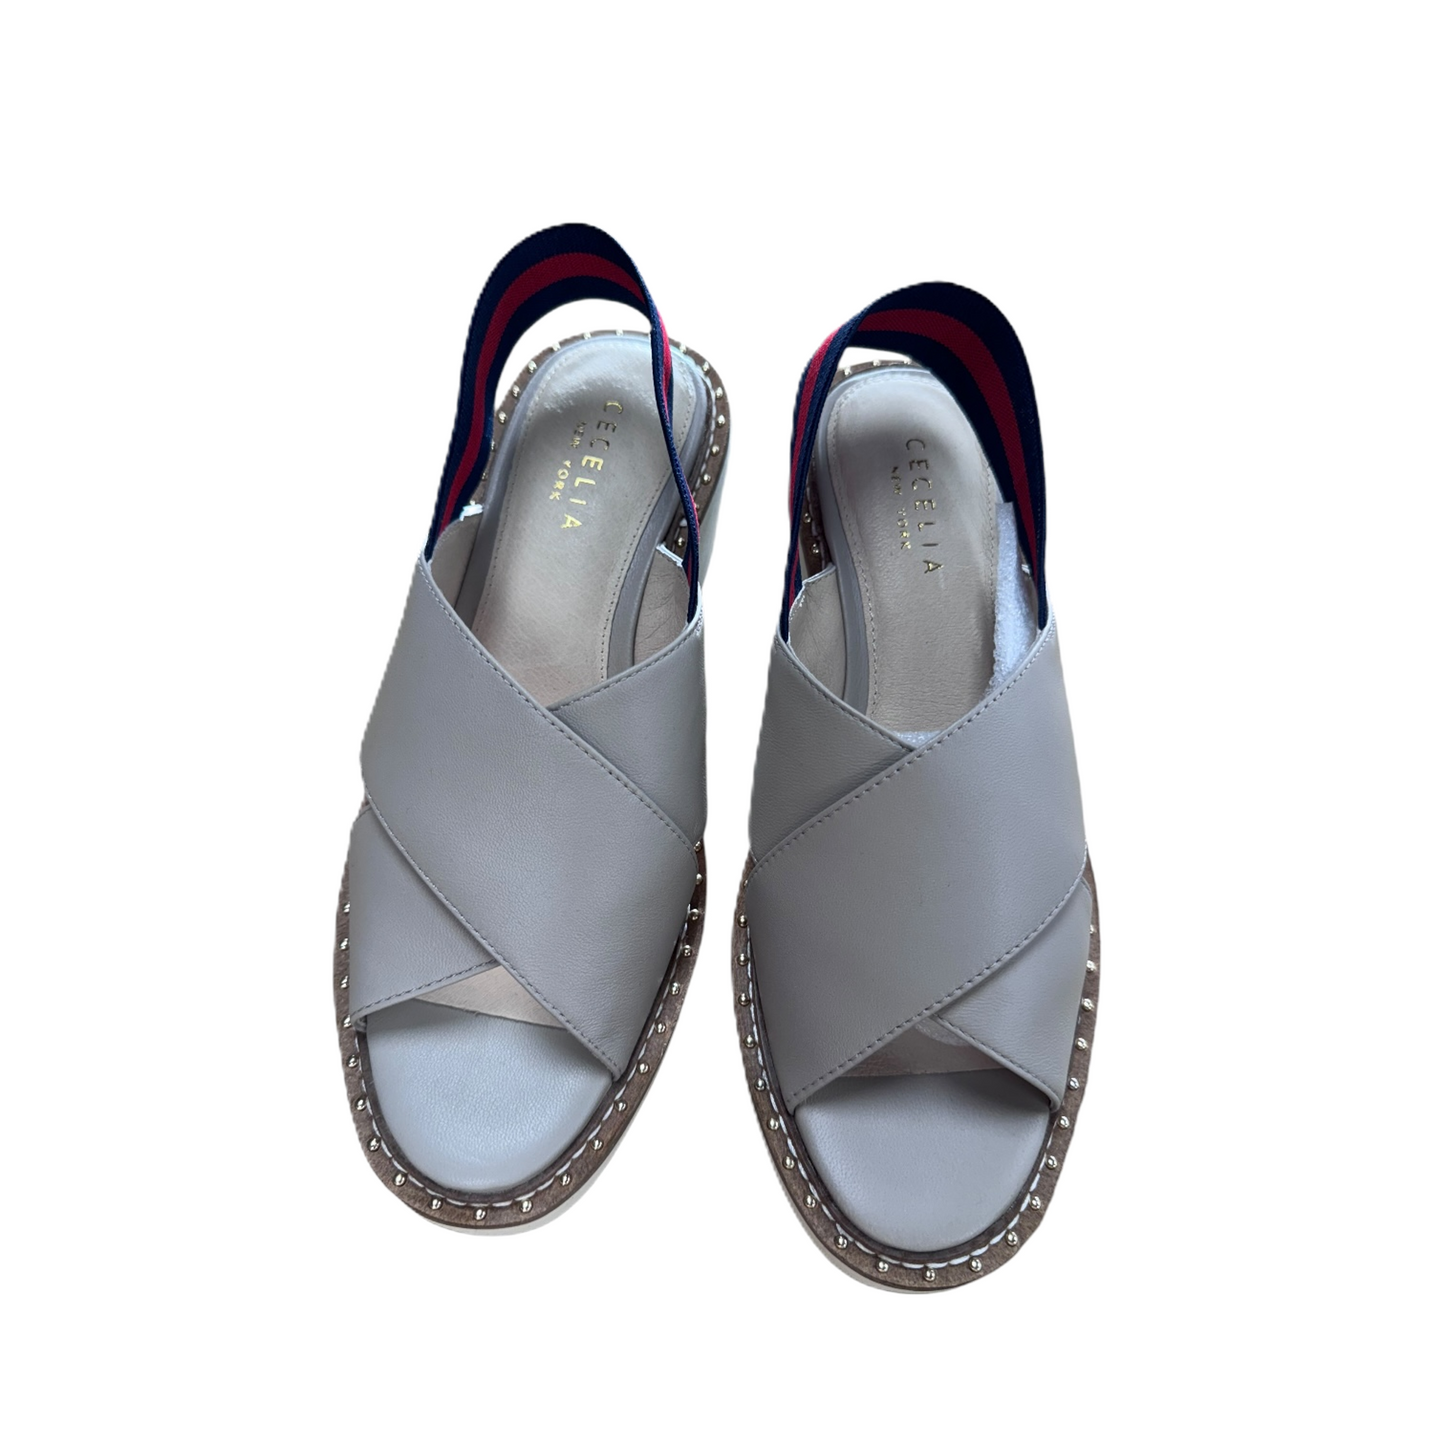 Sandals Heels Wedge By cecelia  Size: 7.5